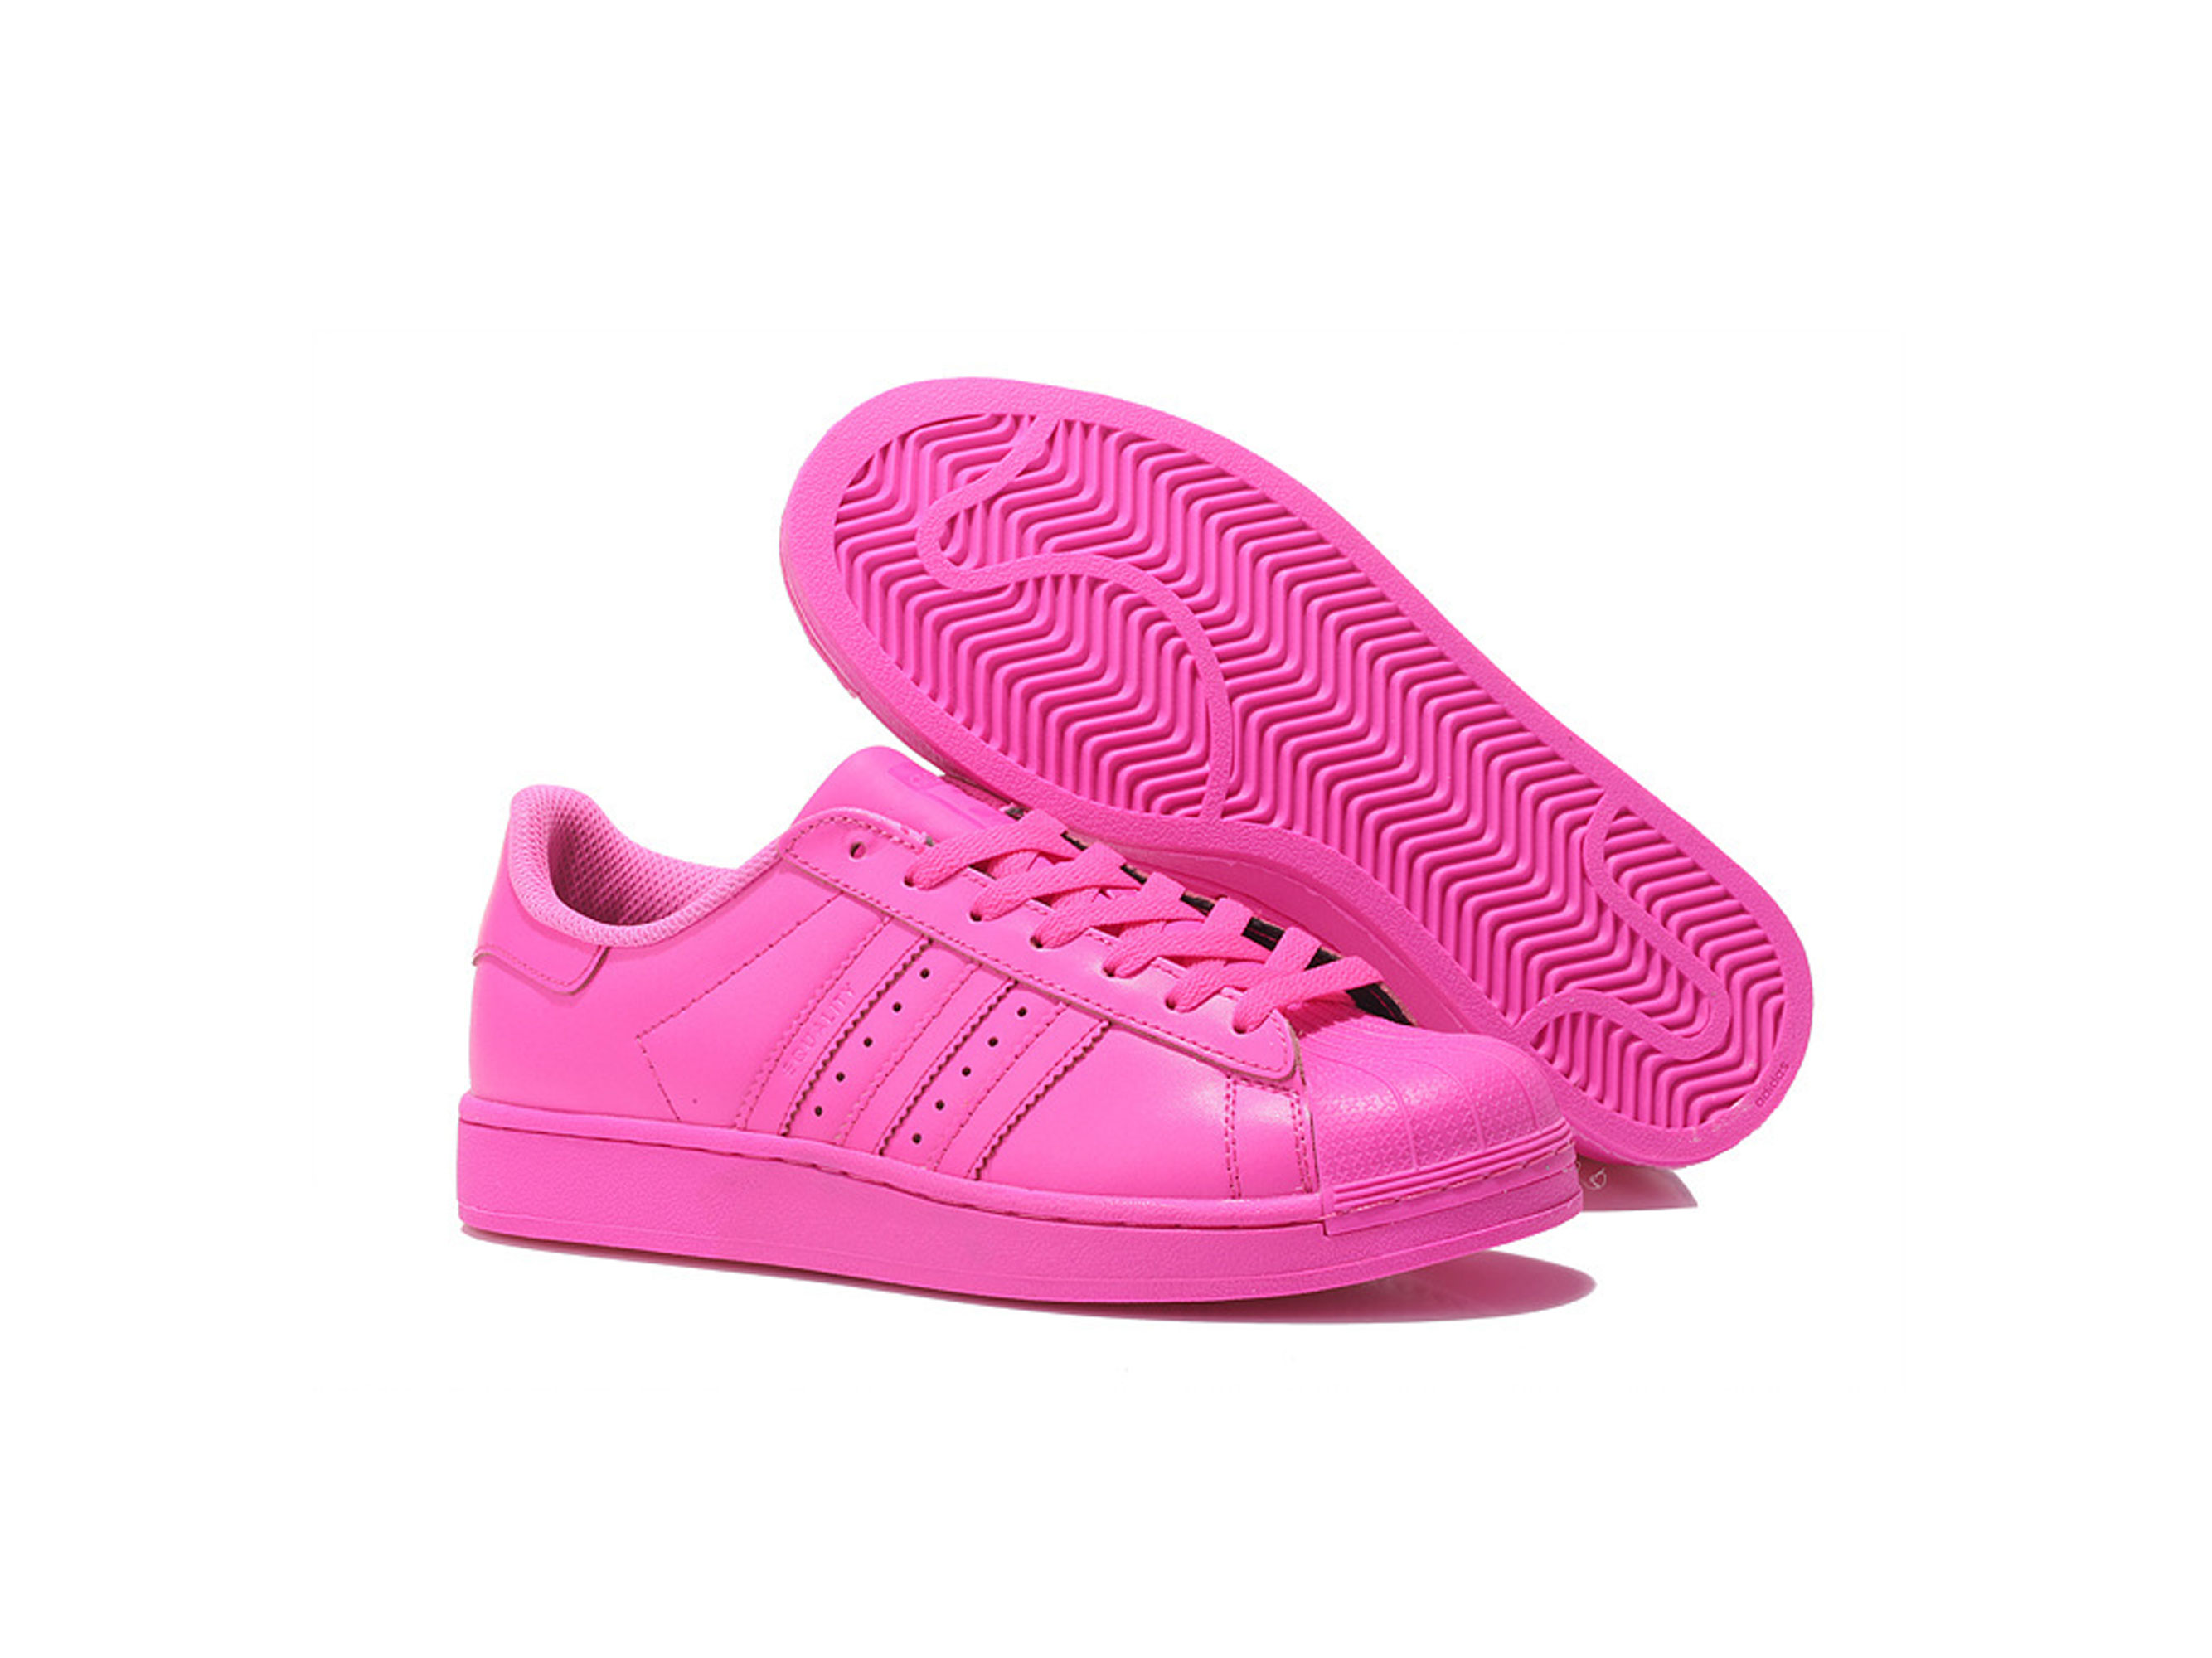 adidas supercolor pink